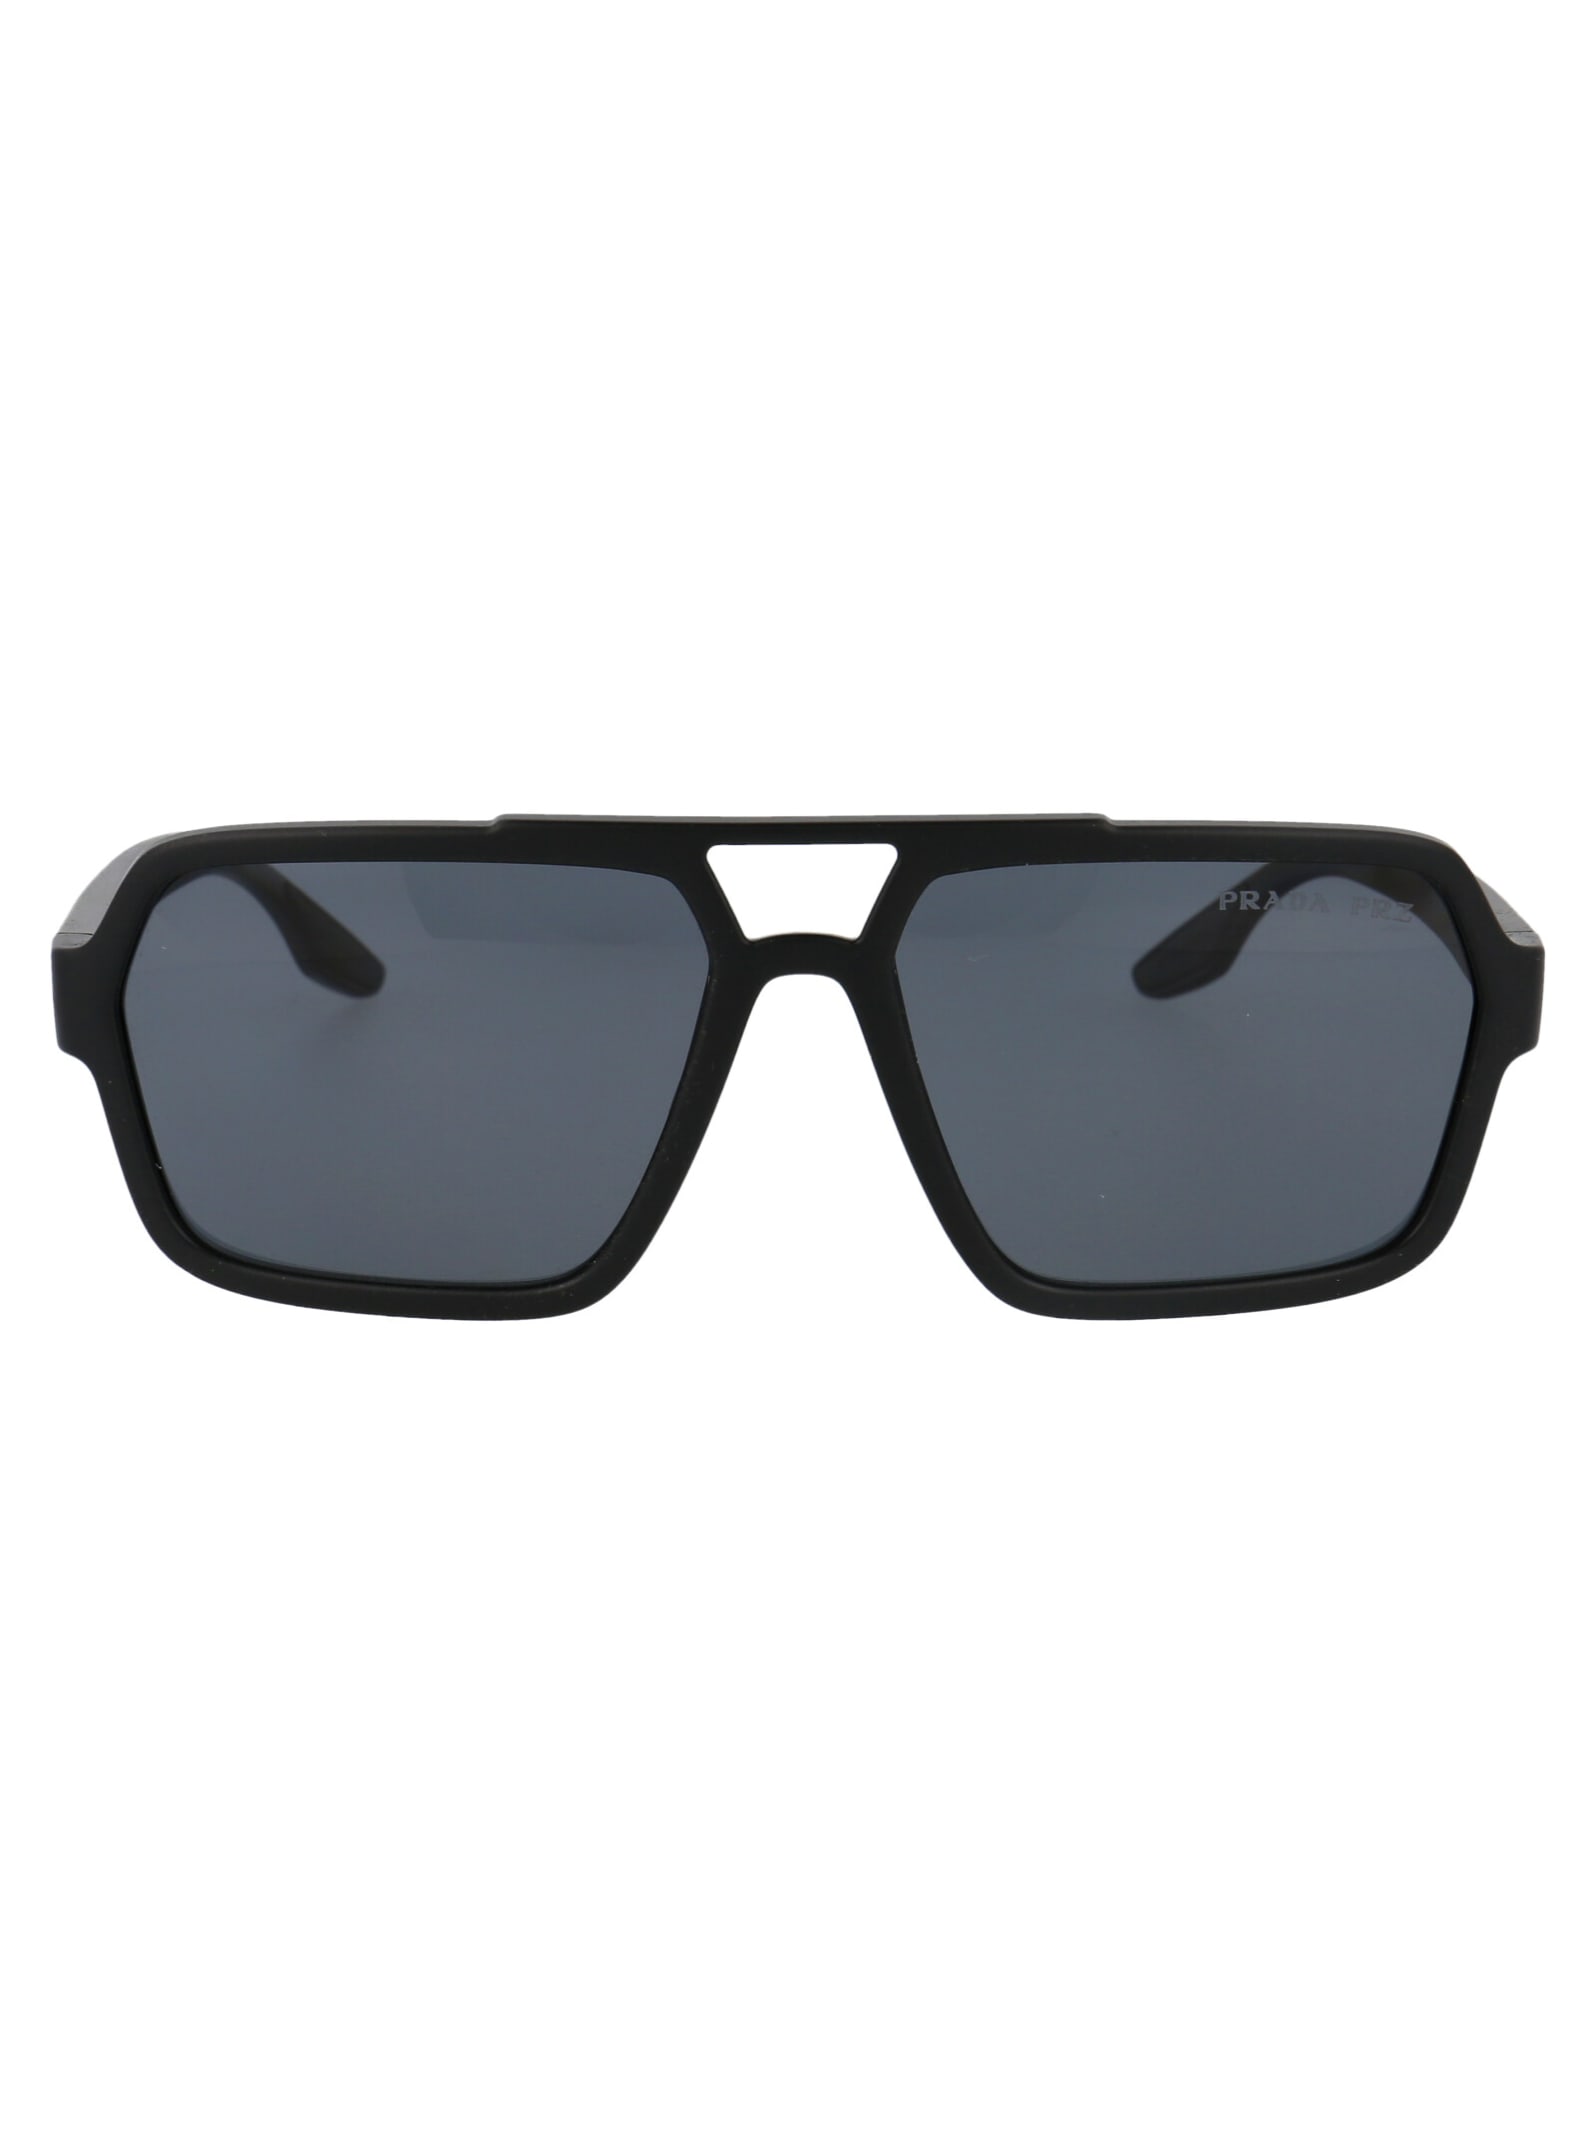 Prada Eyewear 0ps 01xs Sunglasses